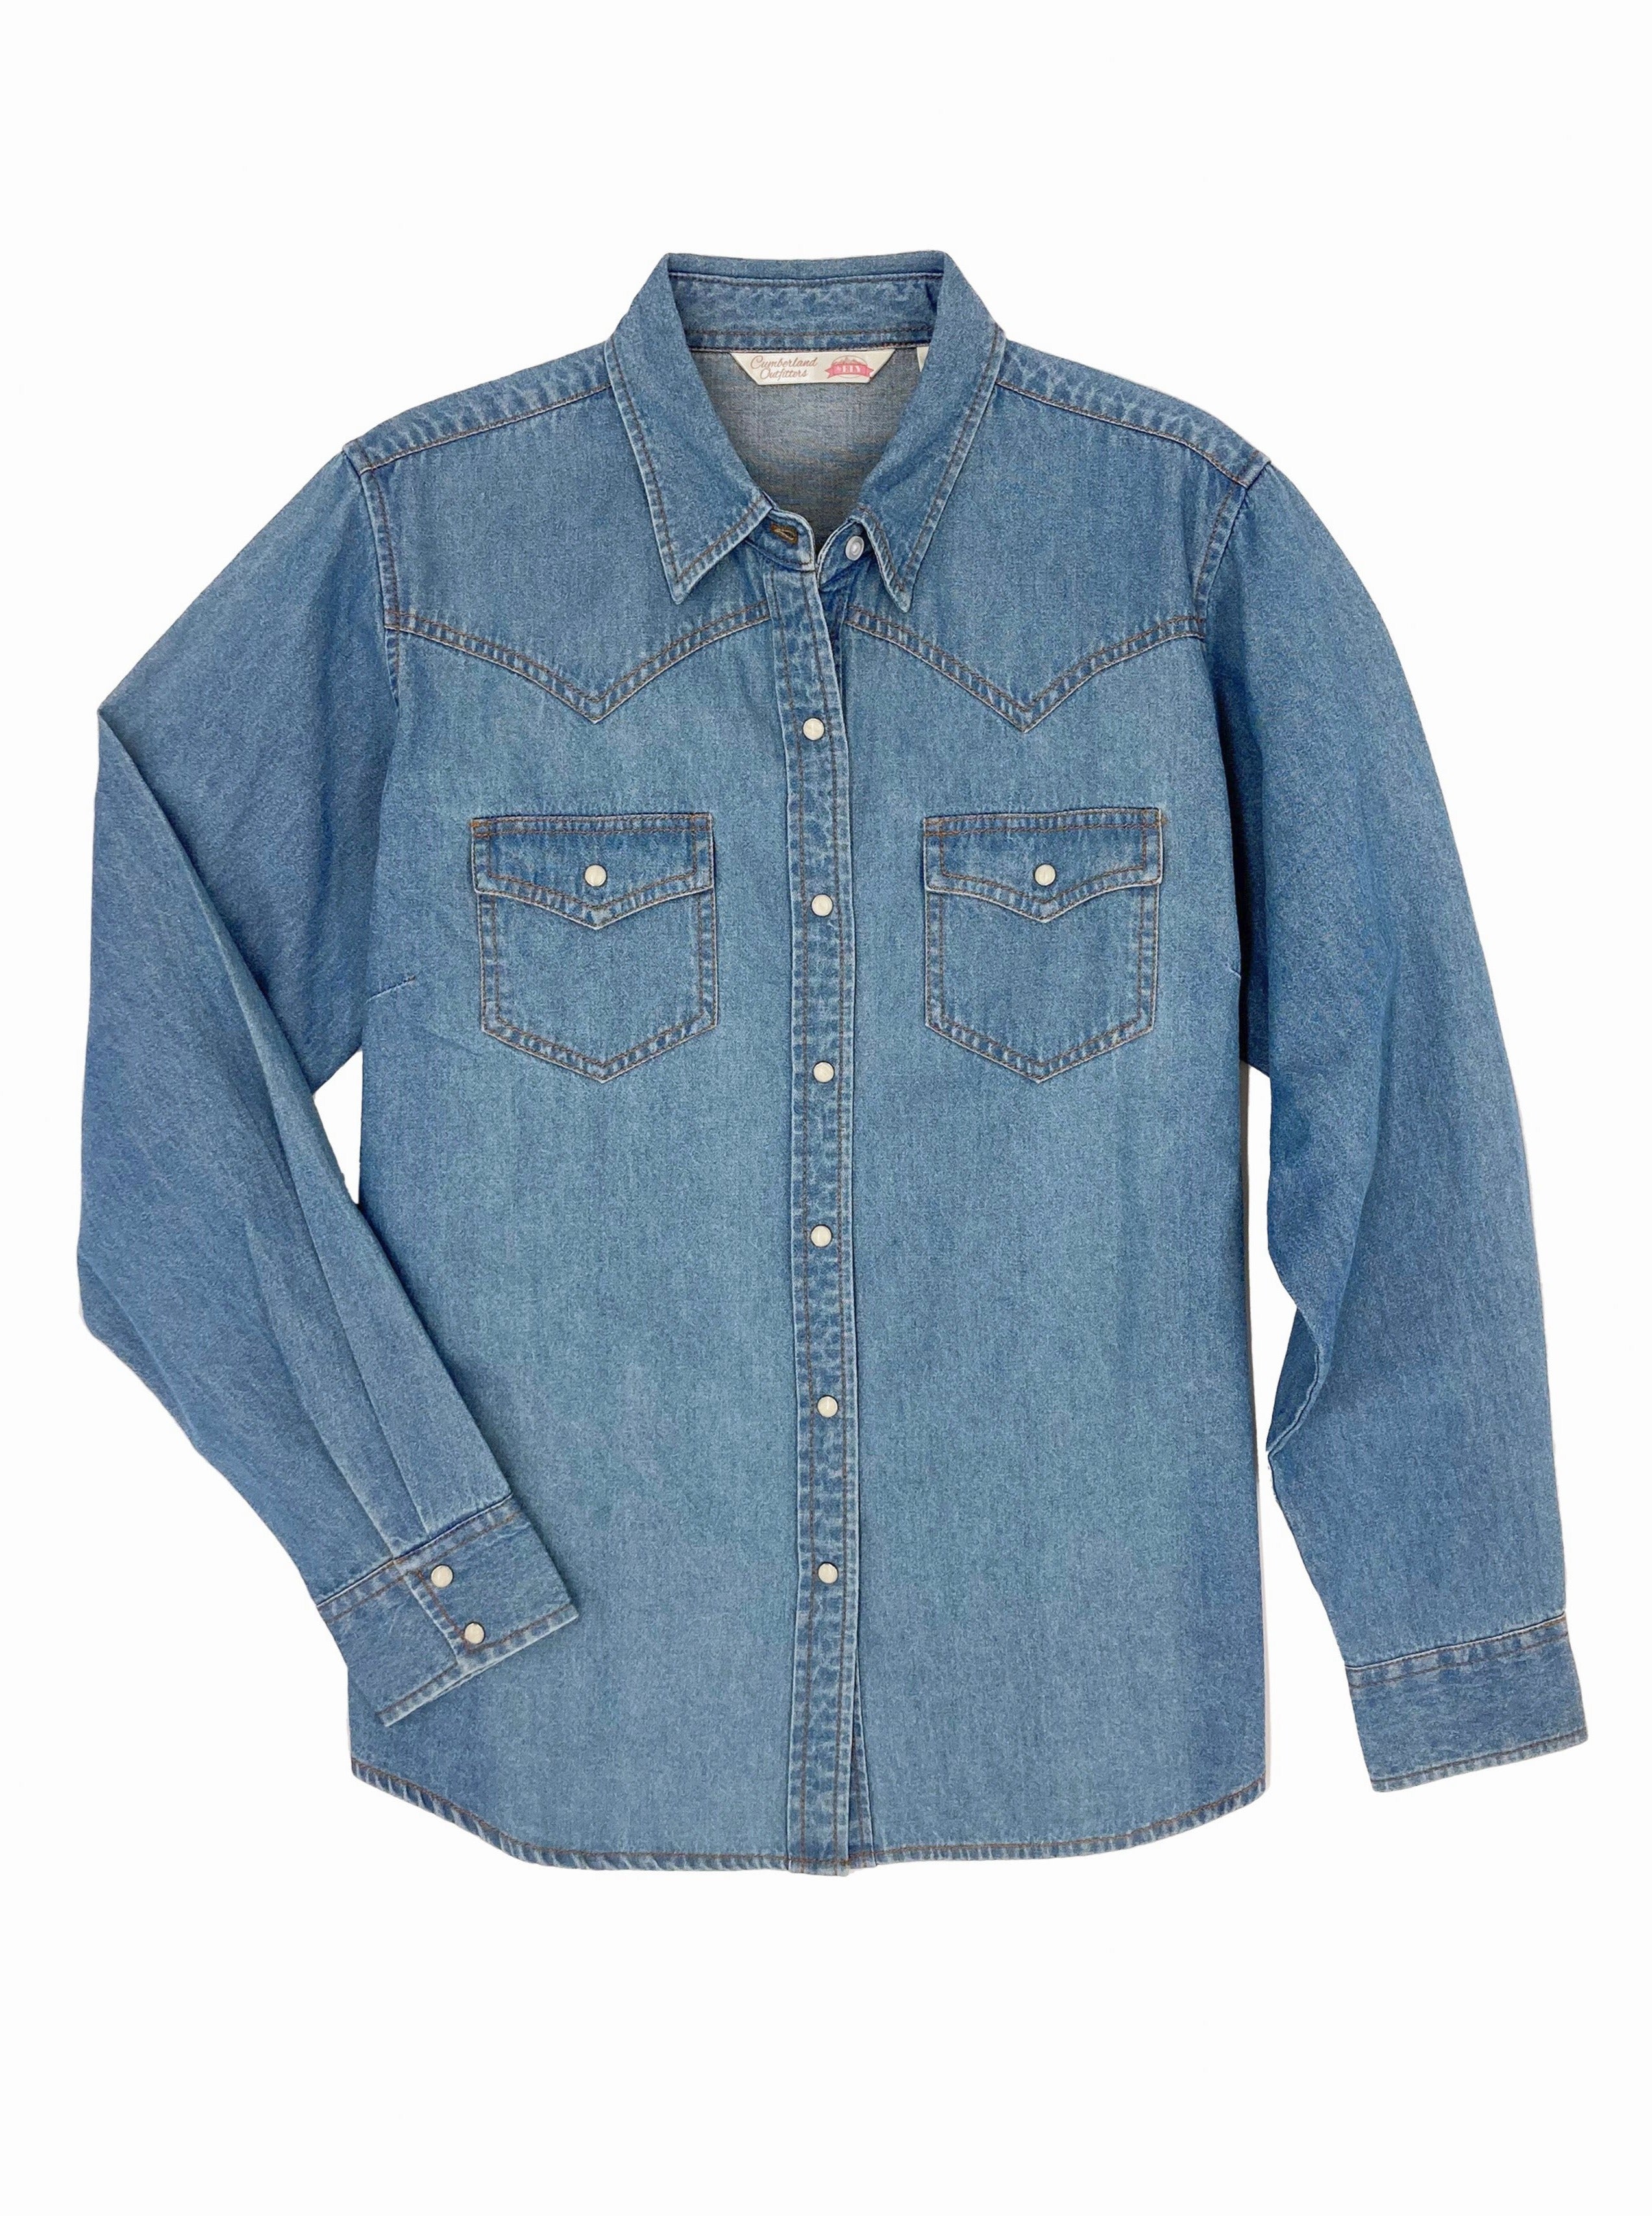 1955 Sawtooth Western Shirt - Medium Wash | Levi's® US